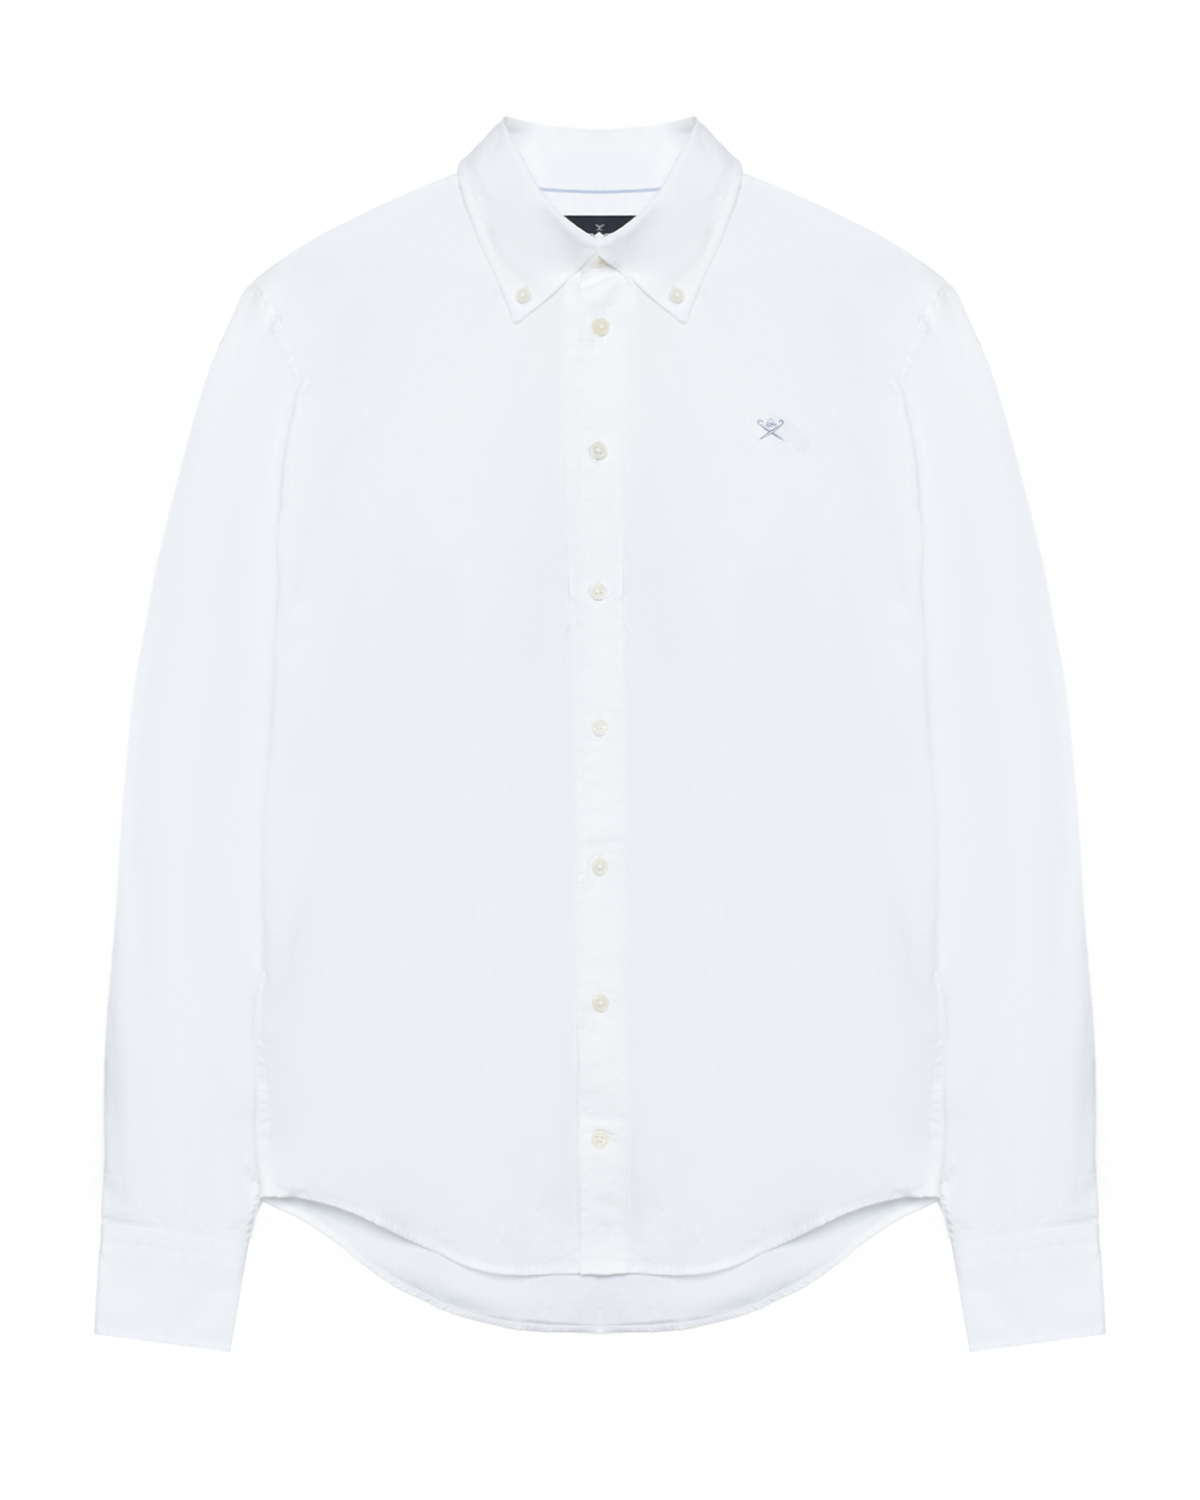 Рубашка оксфорд, вышивка на груди Hackett London, размер 176, цвет нет цвета